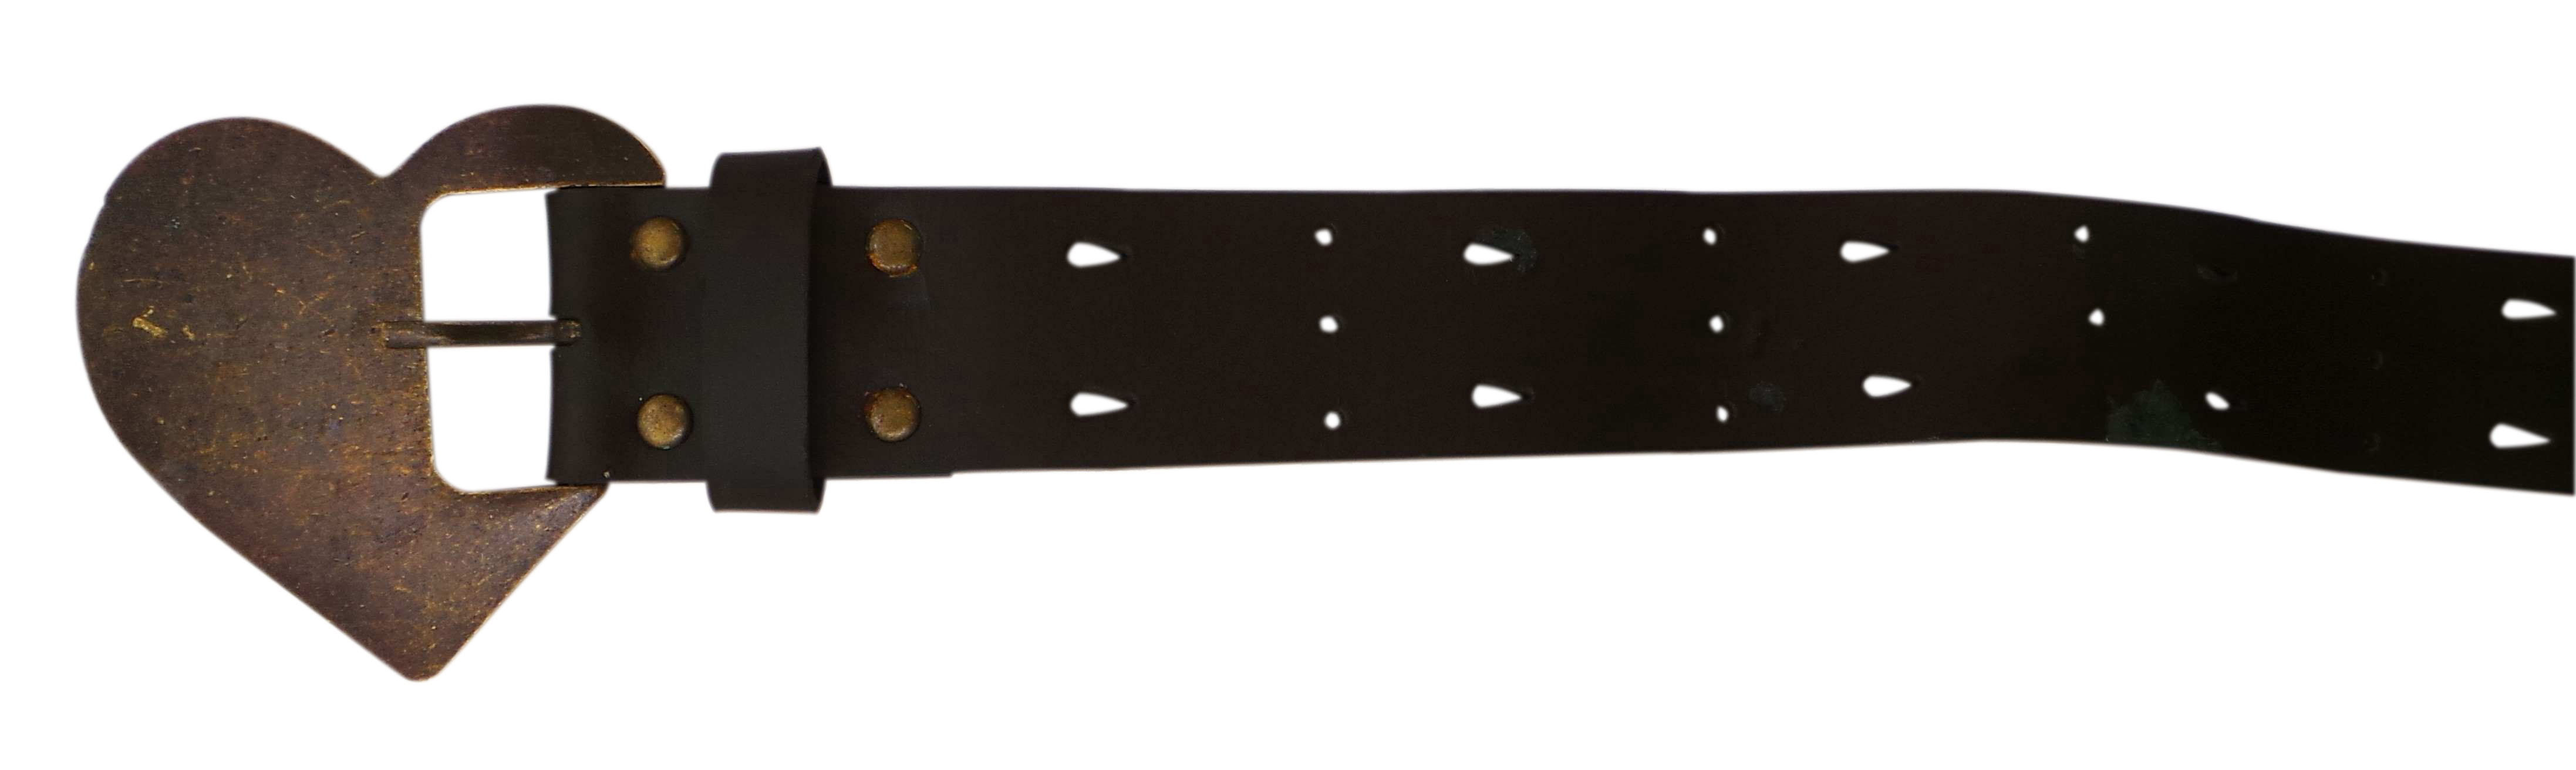 Wholesale Joblot of 100 Ladies Damaged Faux Leather Belts 3 Styles